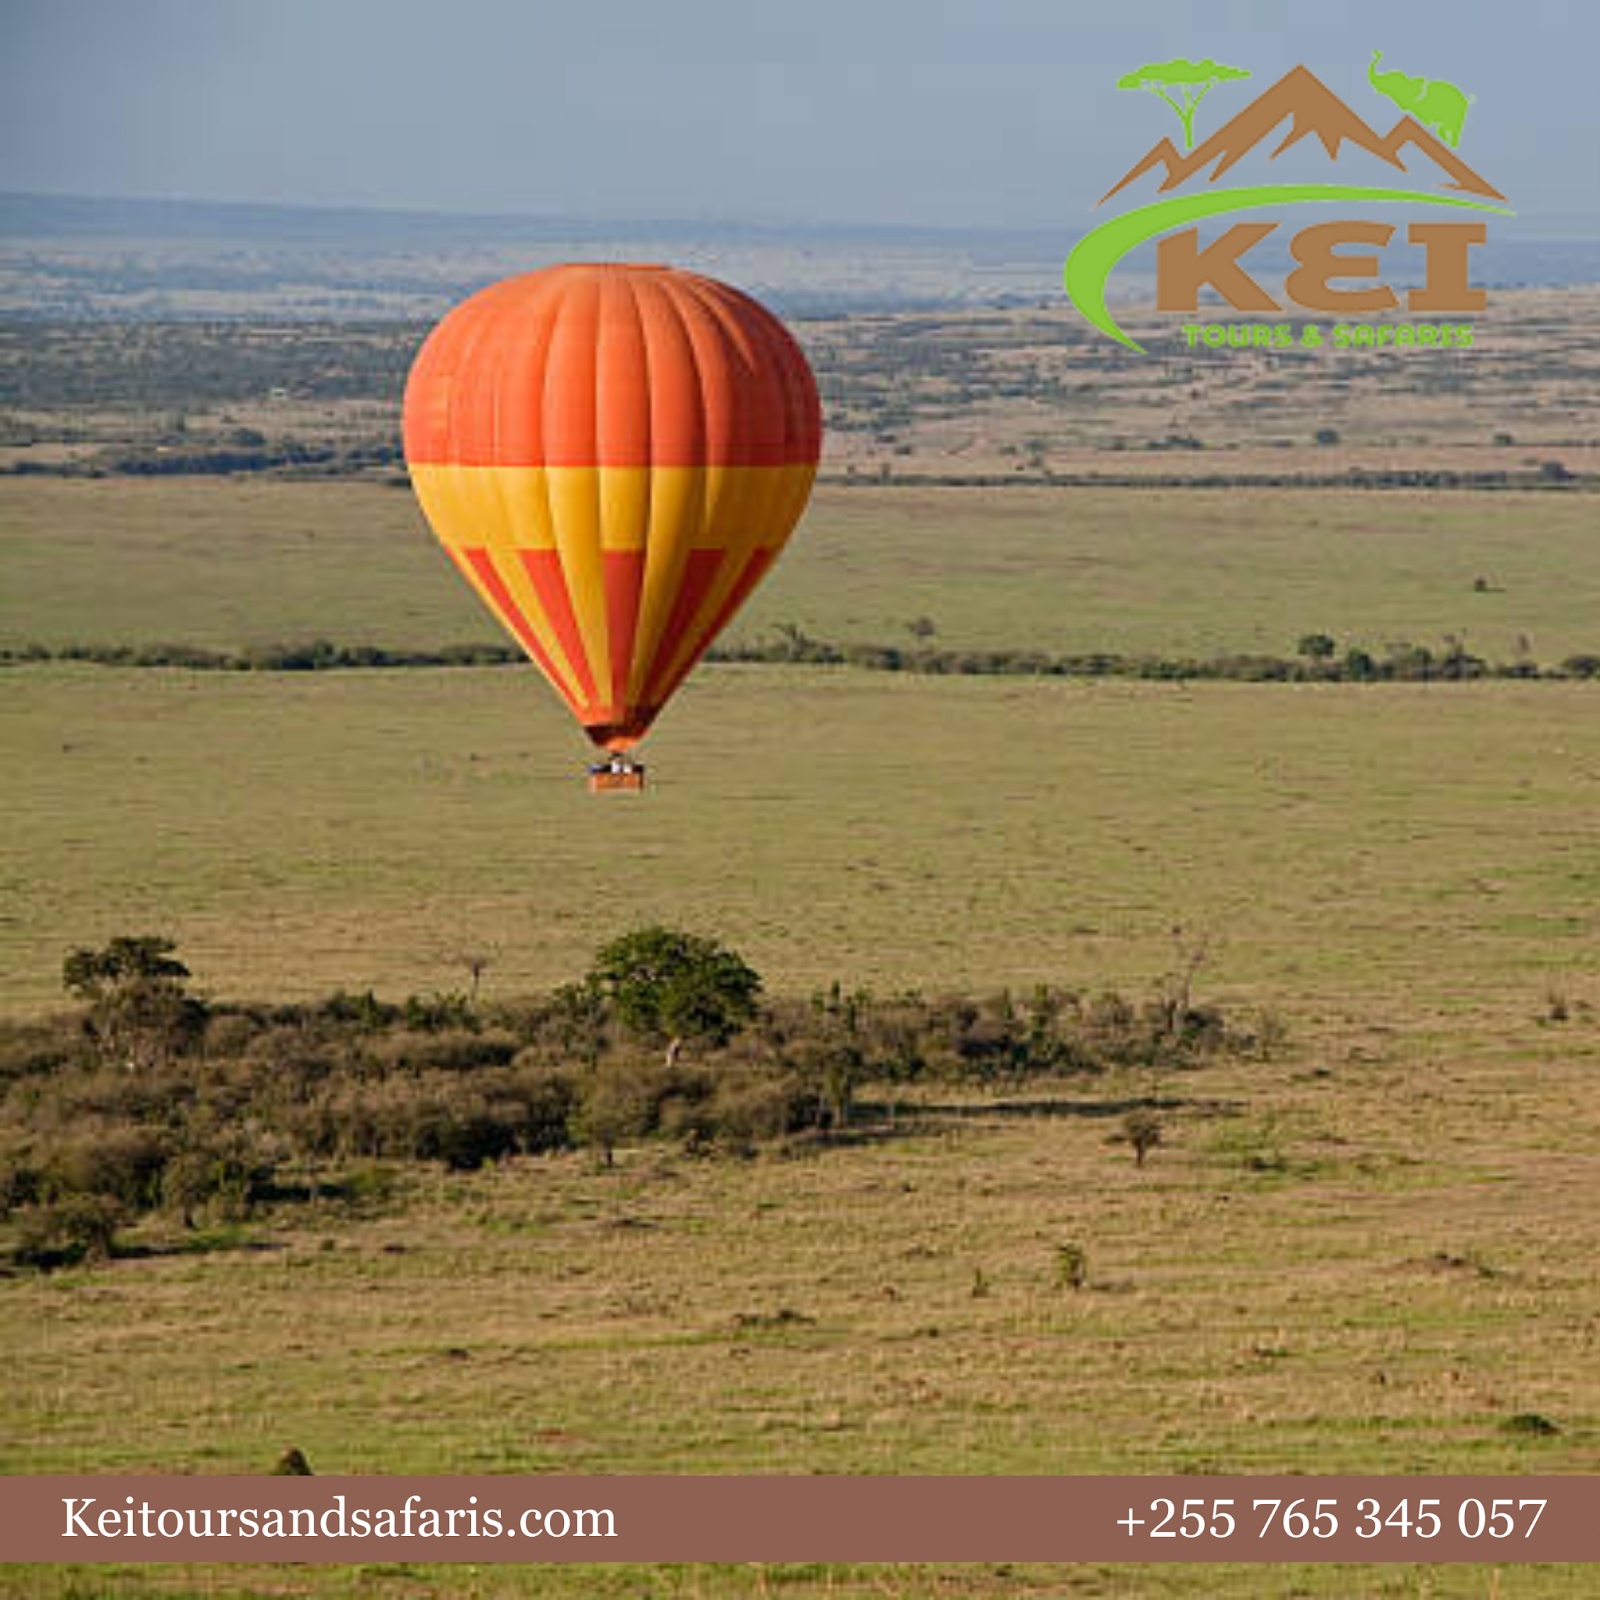 Tanzania Balloon Safari